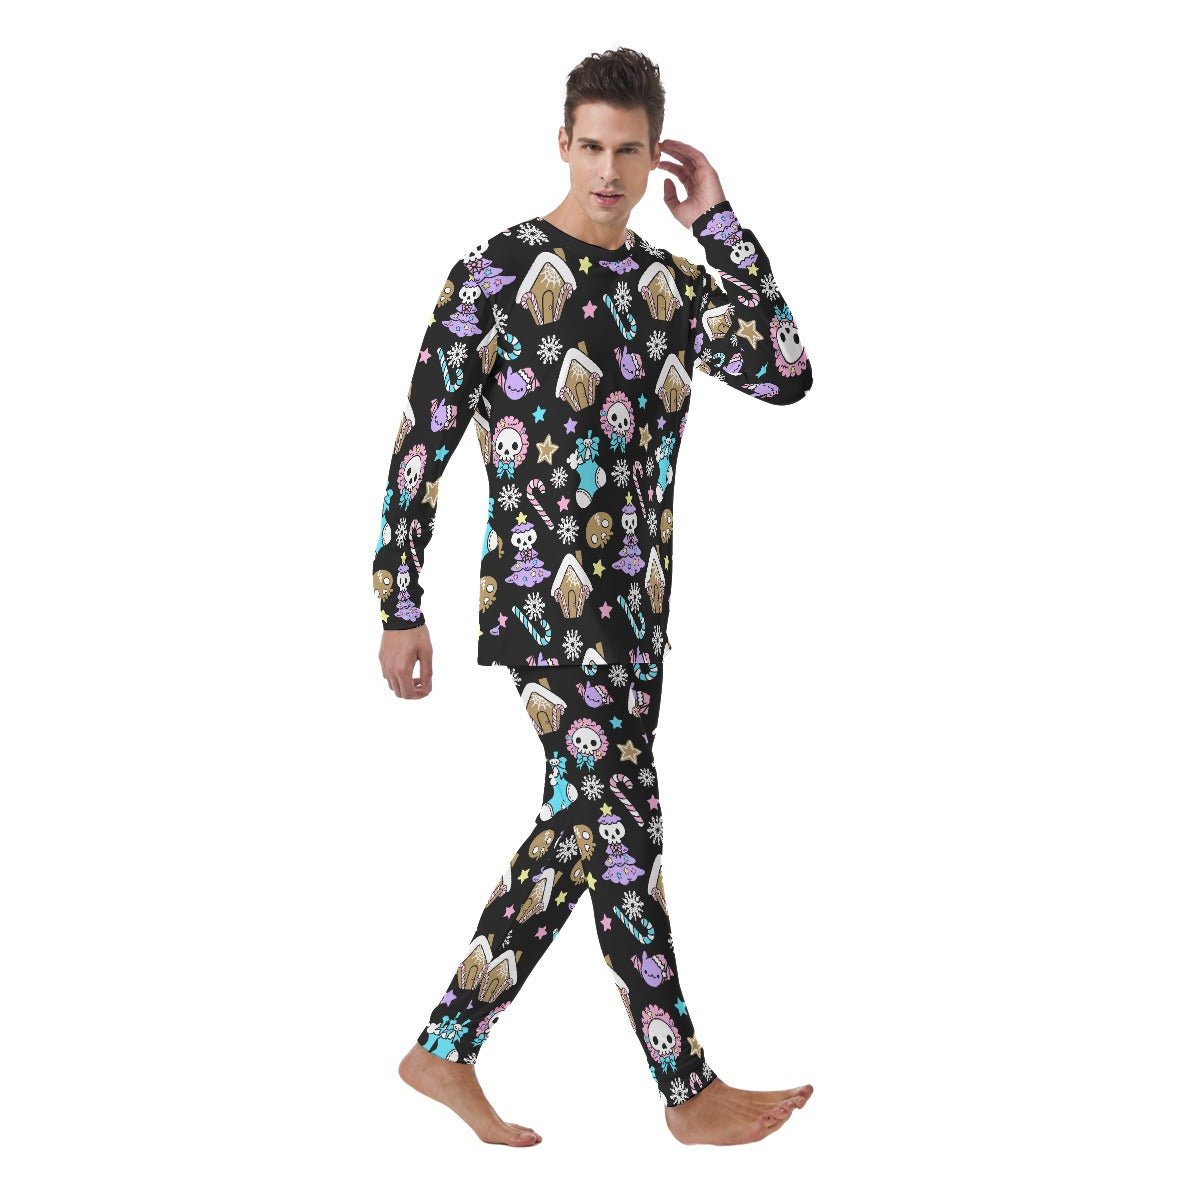 Men's Christmas Pyjamas - Creepy Kawaii - Black - Festive Style